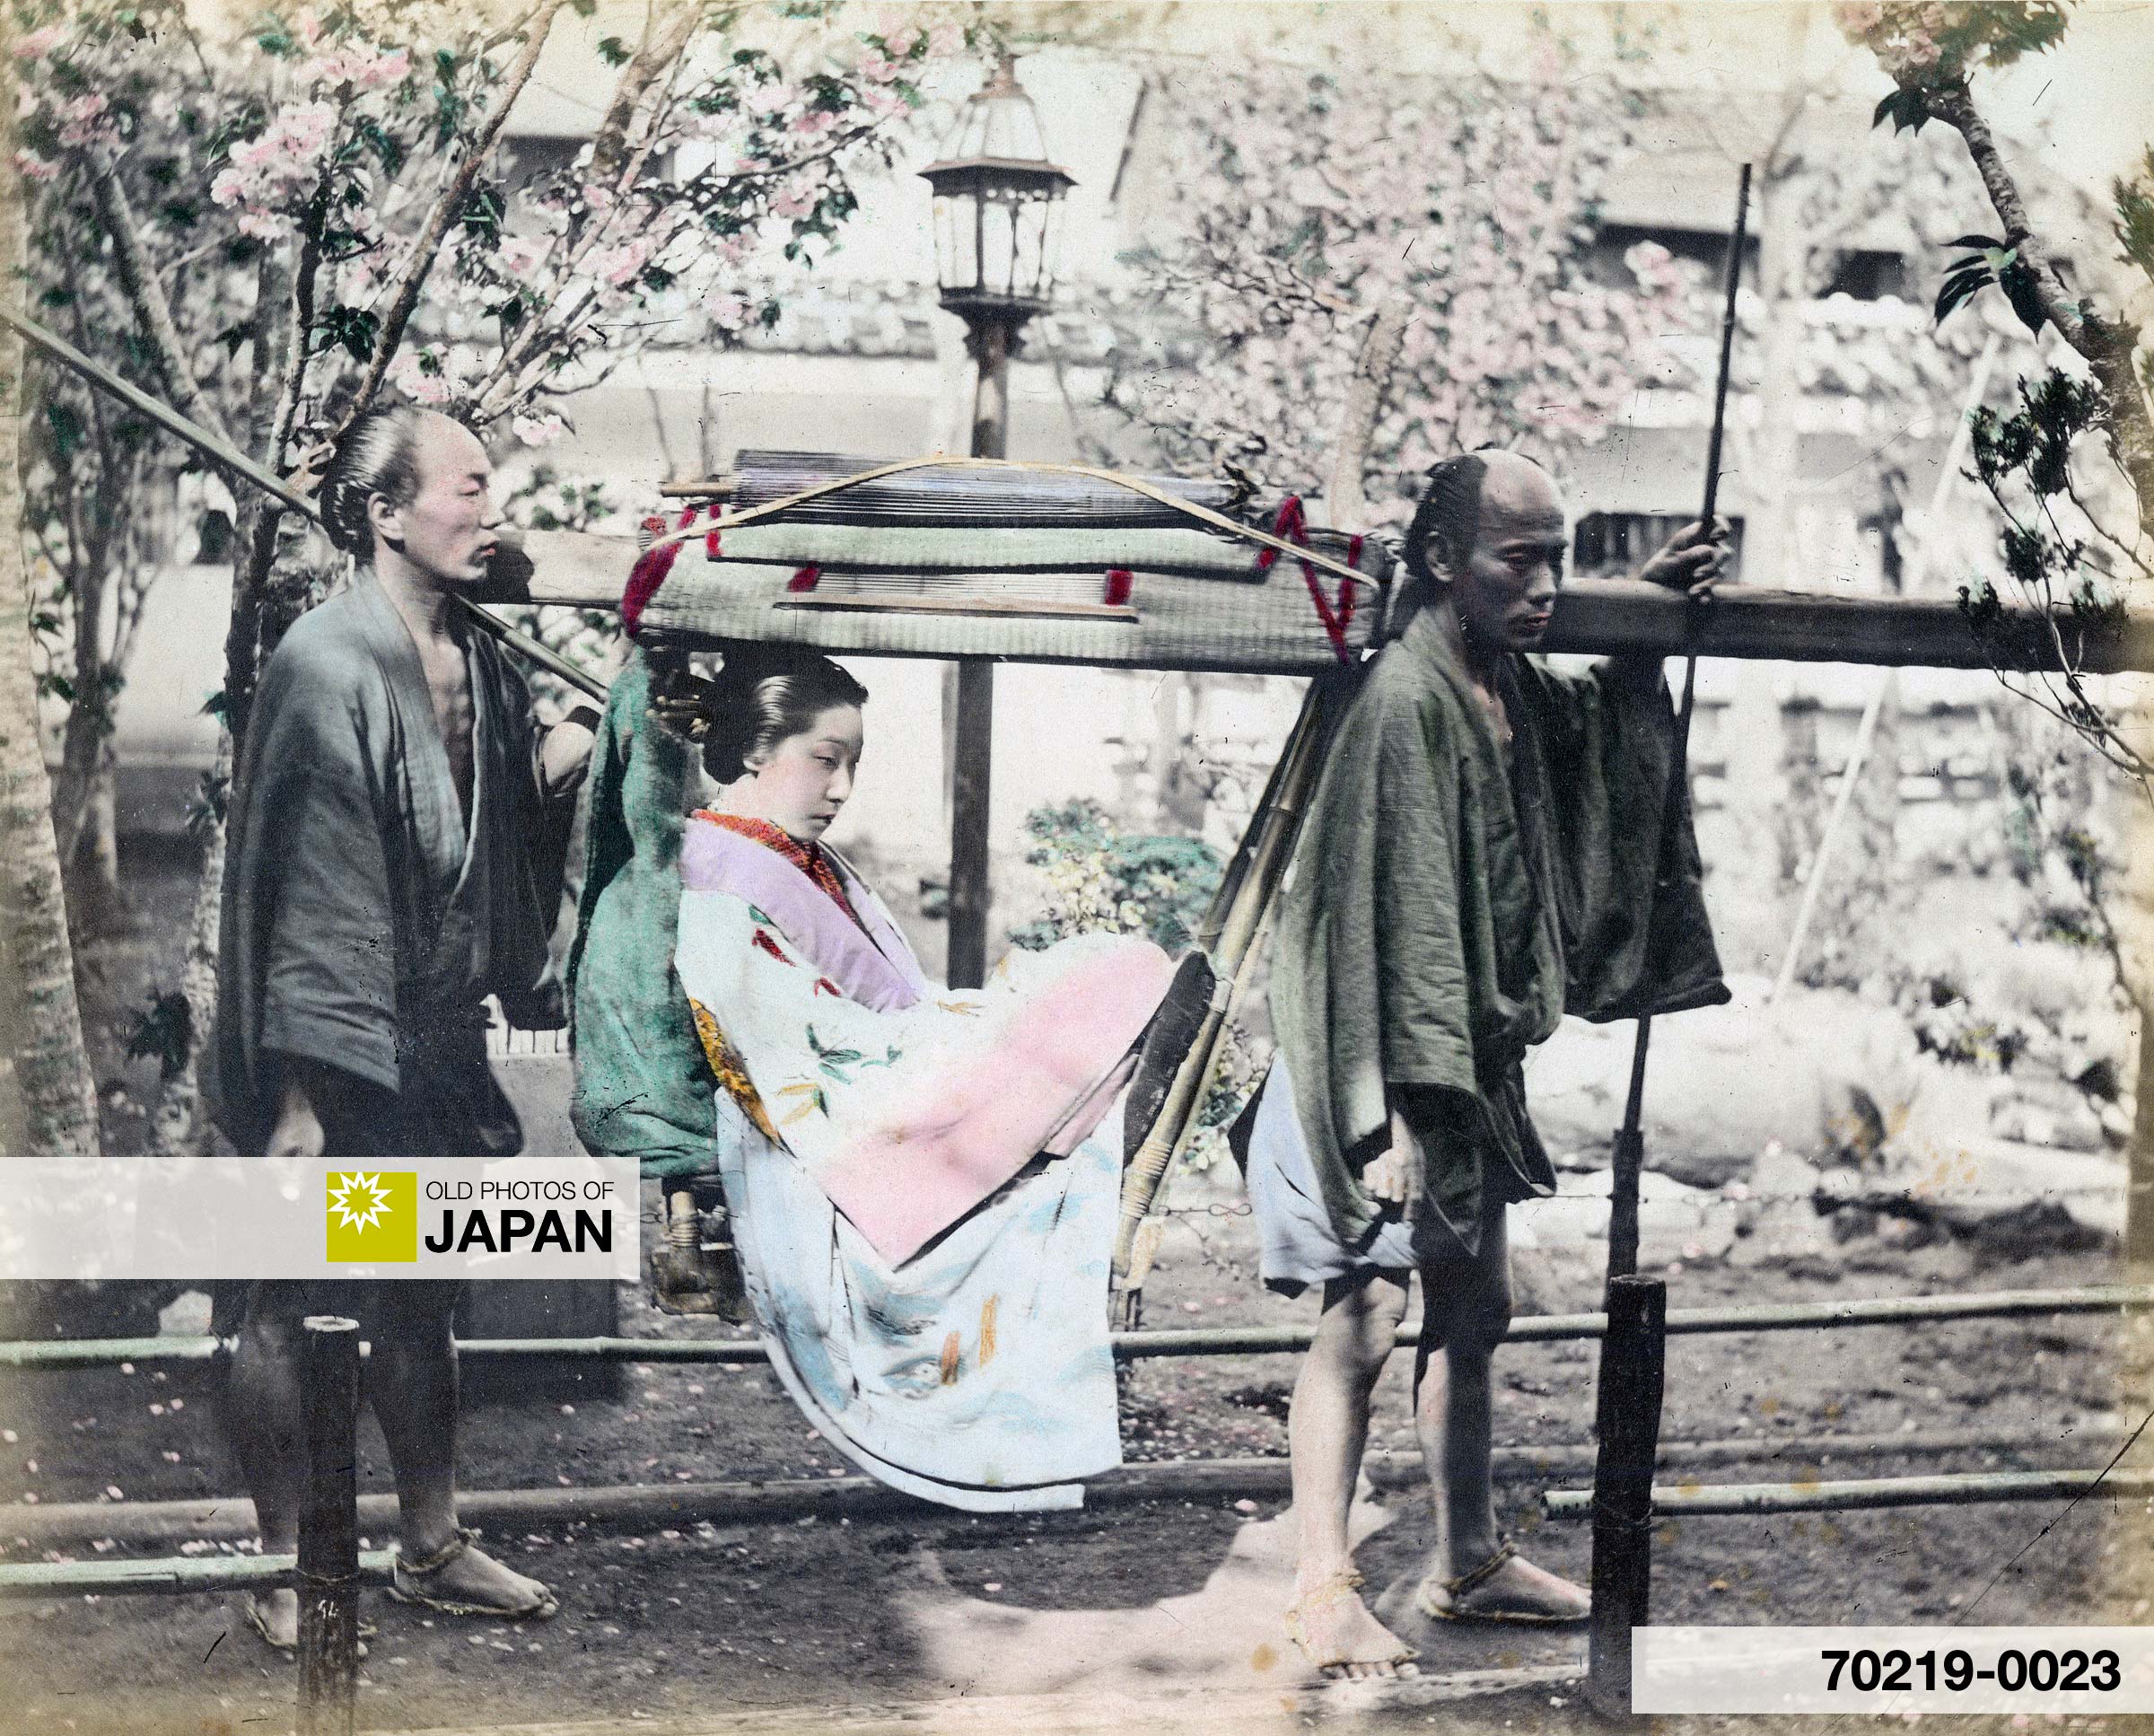 Old Photos Of Japan 駕籠に乗った女性 １８８０年代